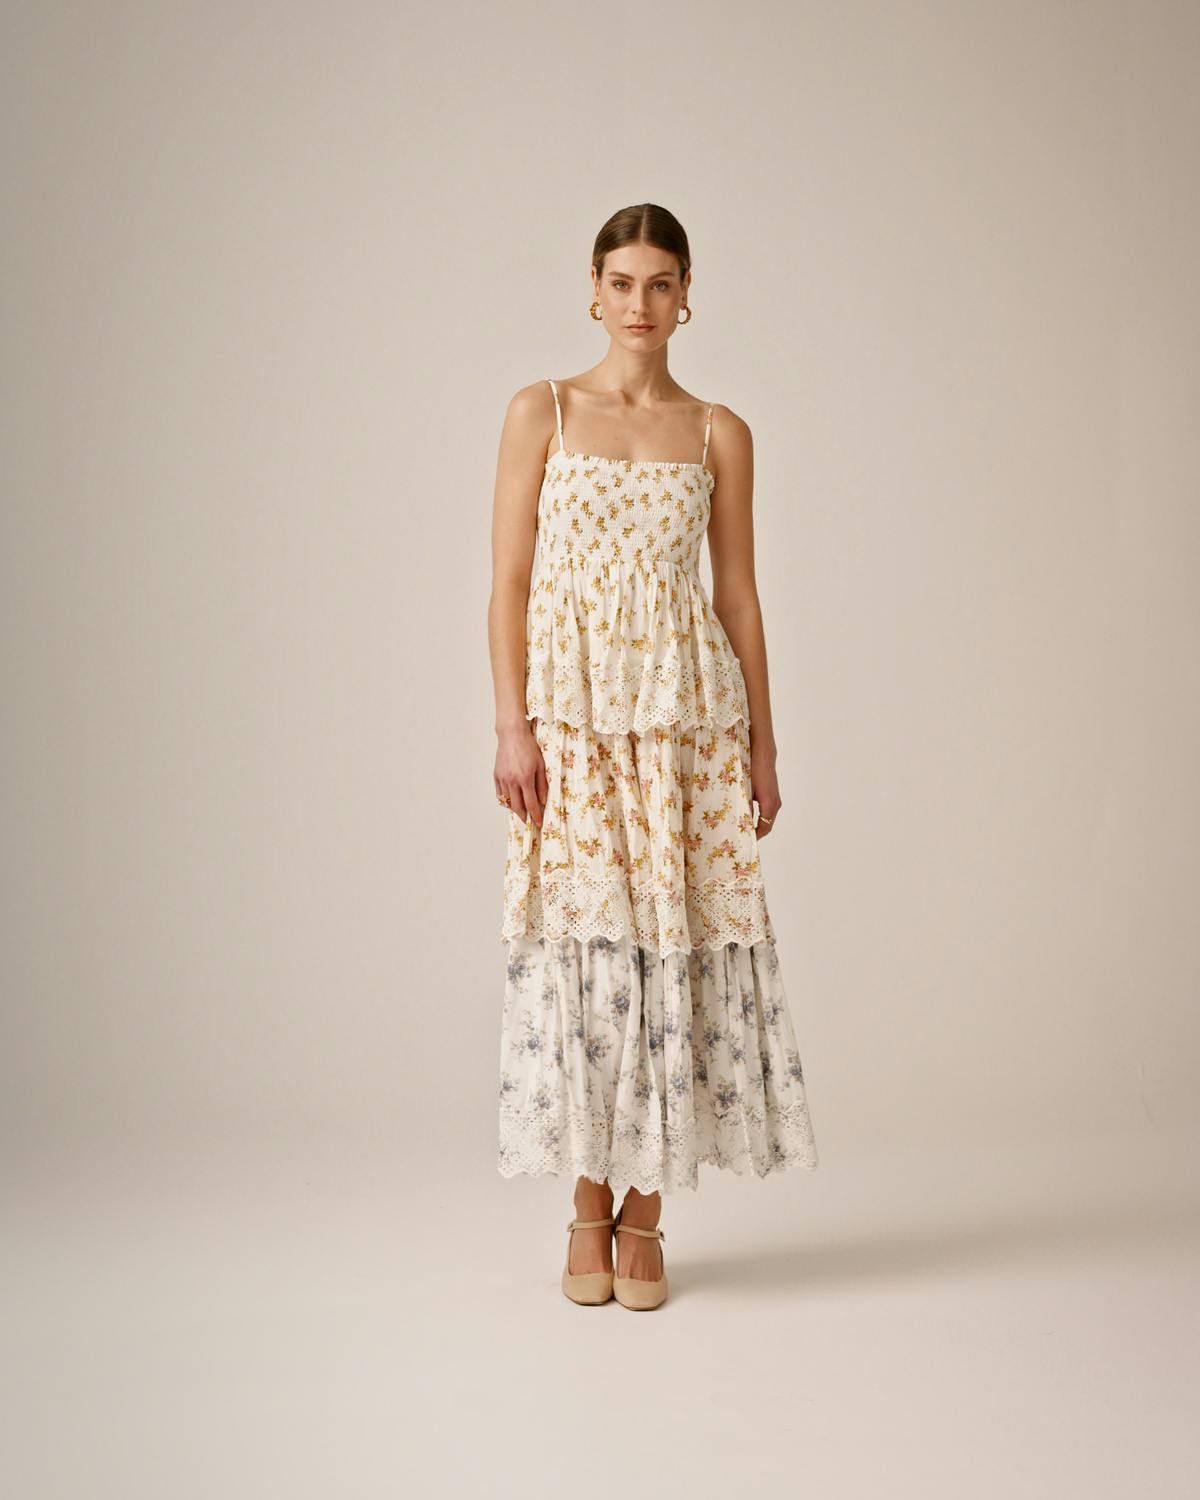 Cotton Slub Layered Dress, Flower Combo. Image #1